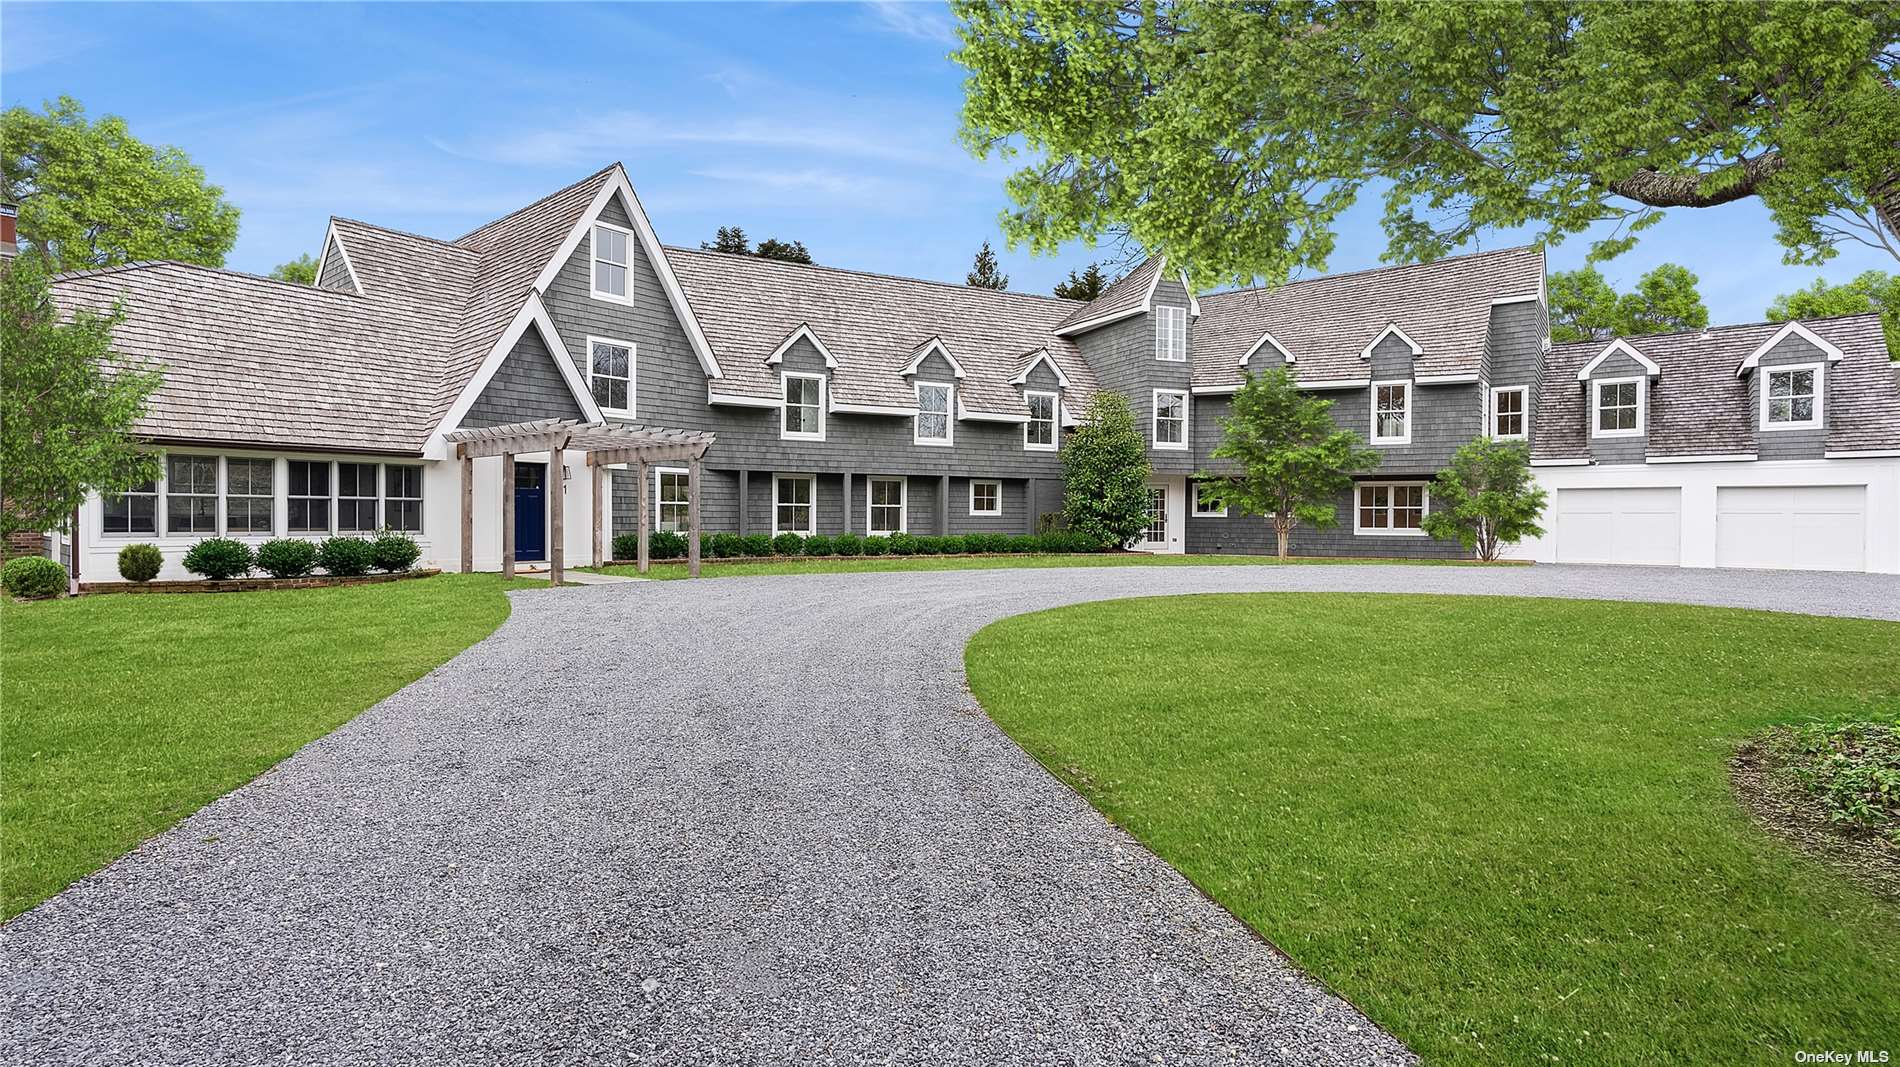 Rental Property at 81 Skimhampton Rd, East Hampton, Hamptons, NY - Bedrooms: 6 
Bathrooms: 8  - $158,000 MO.